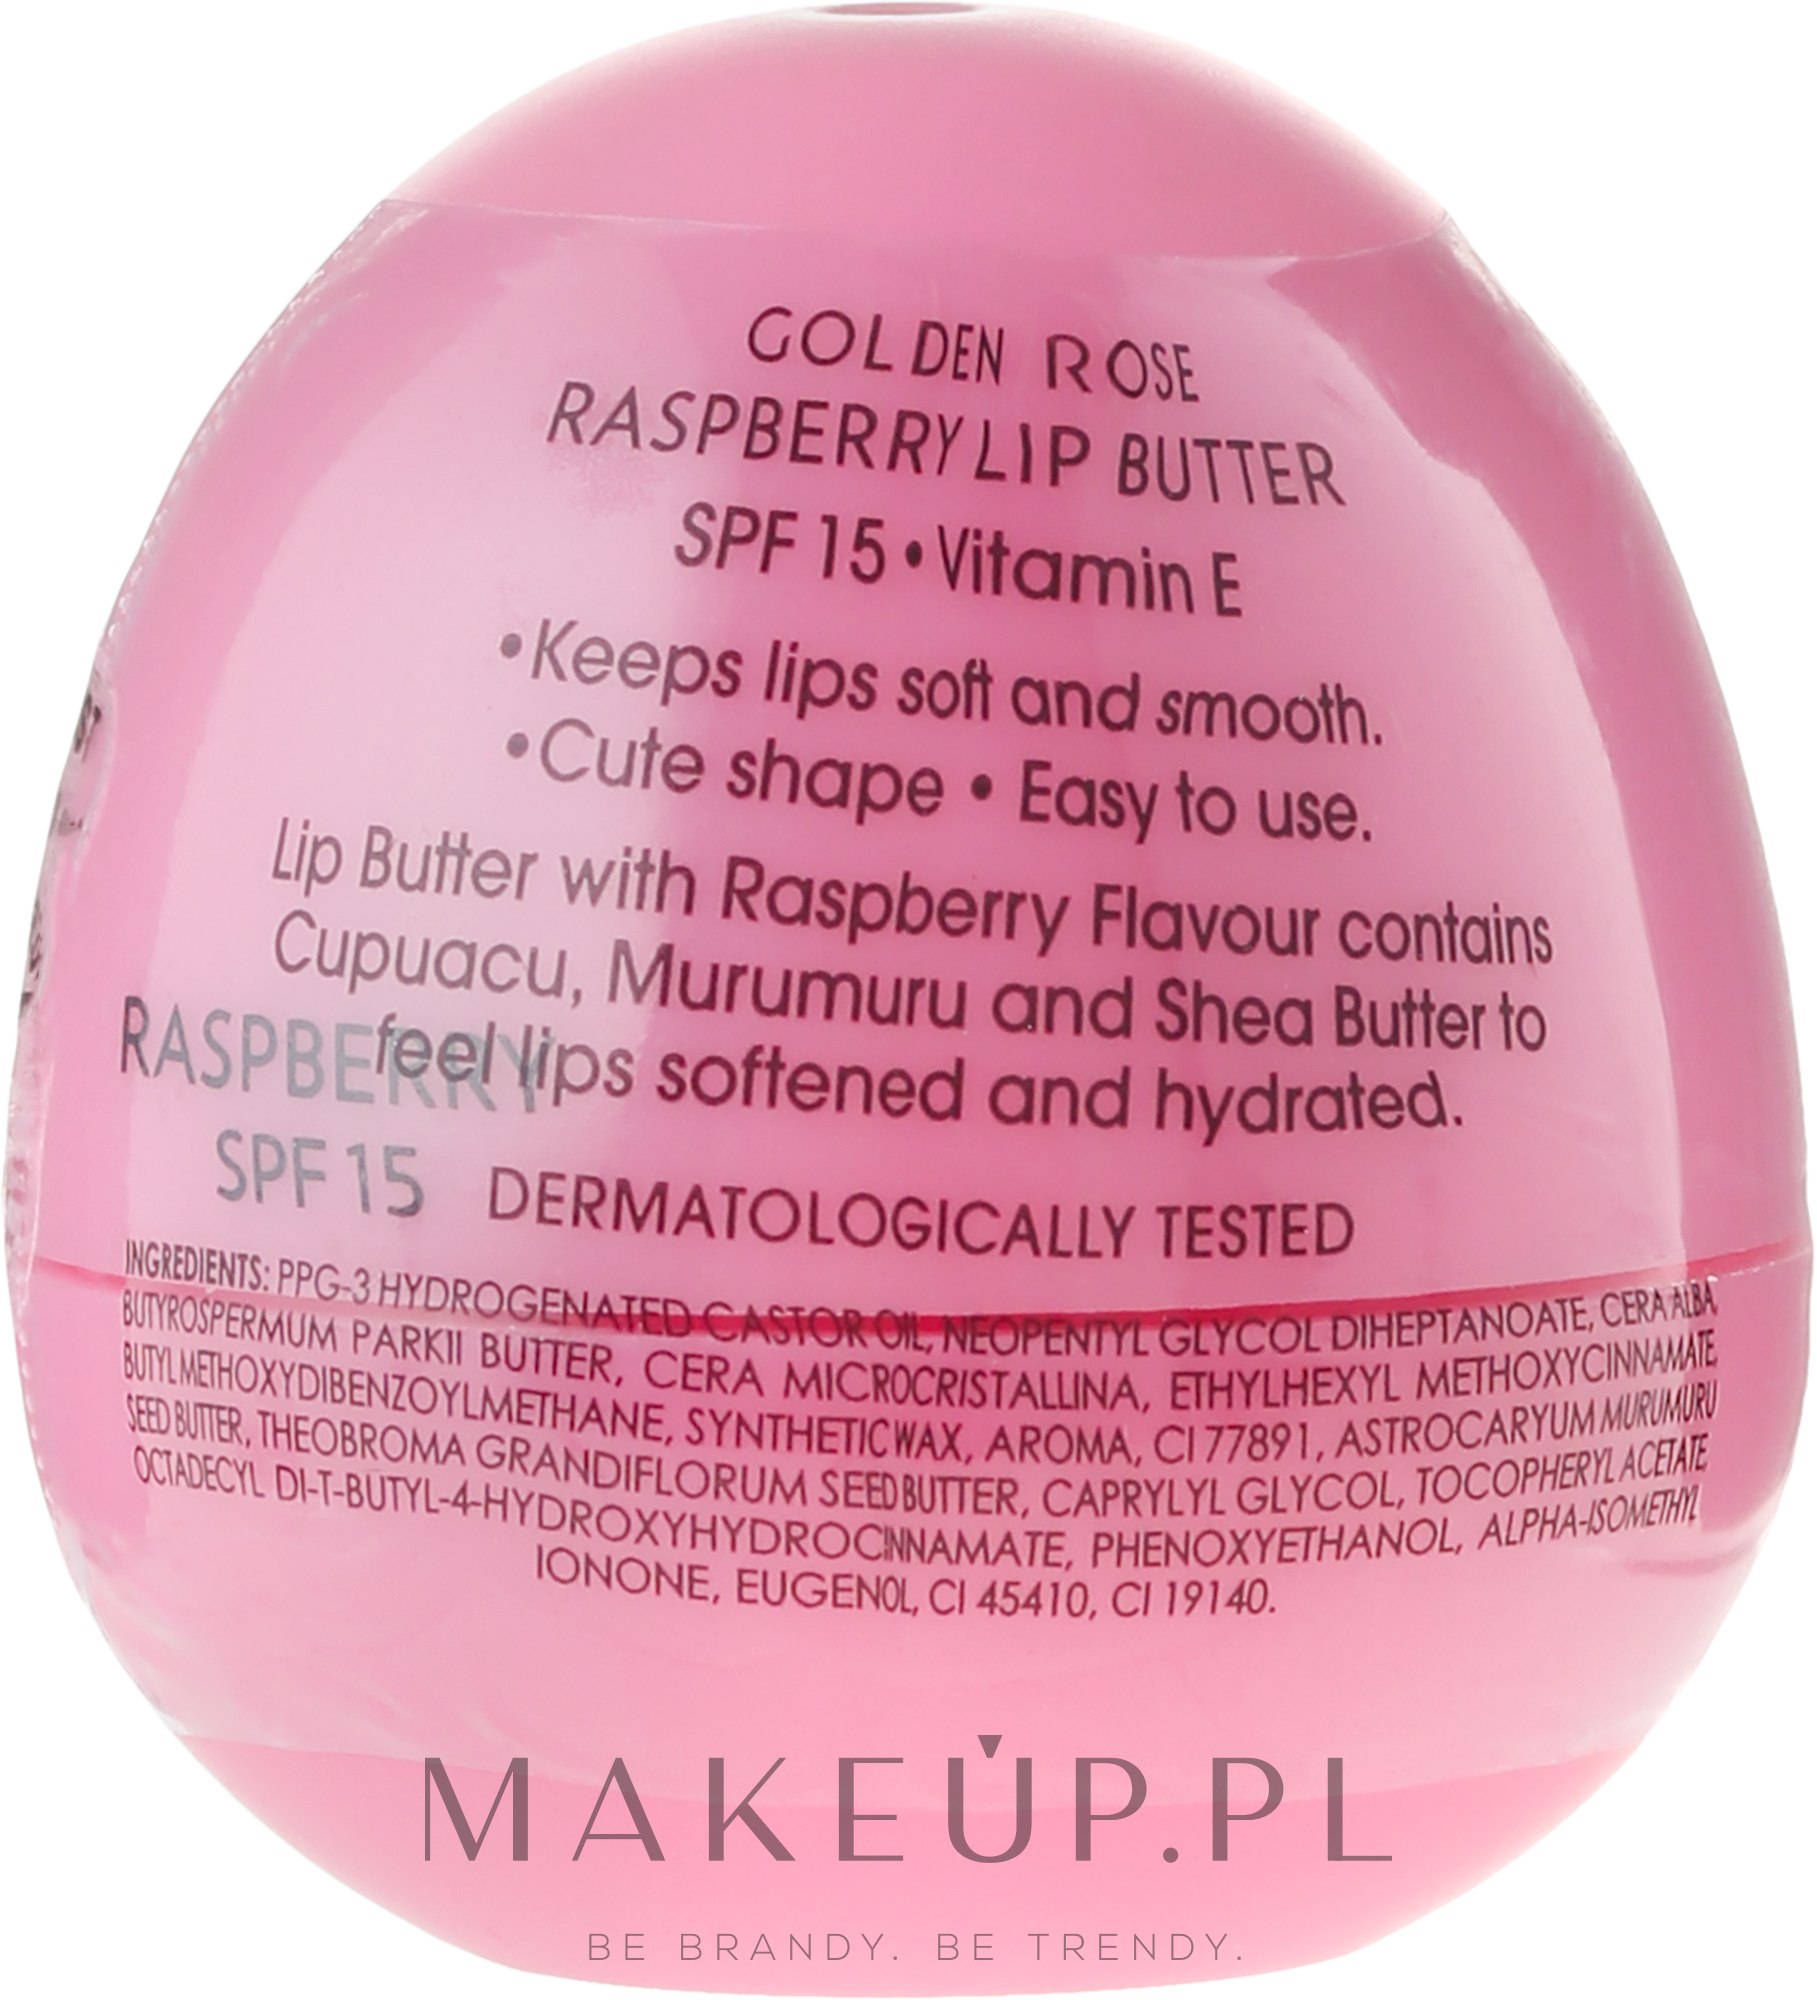 Malinowy balsam do ust - Golden Rose Lip Butter Raspberry SPF 15 — Zdjęcie 8 g